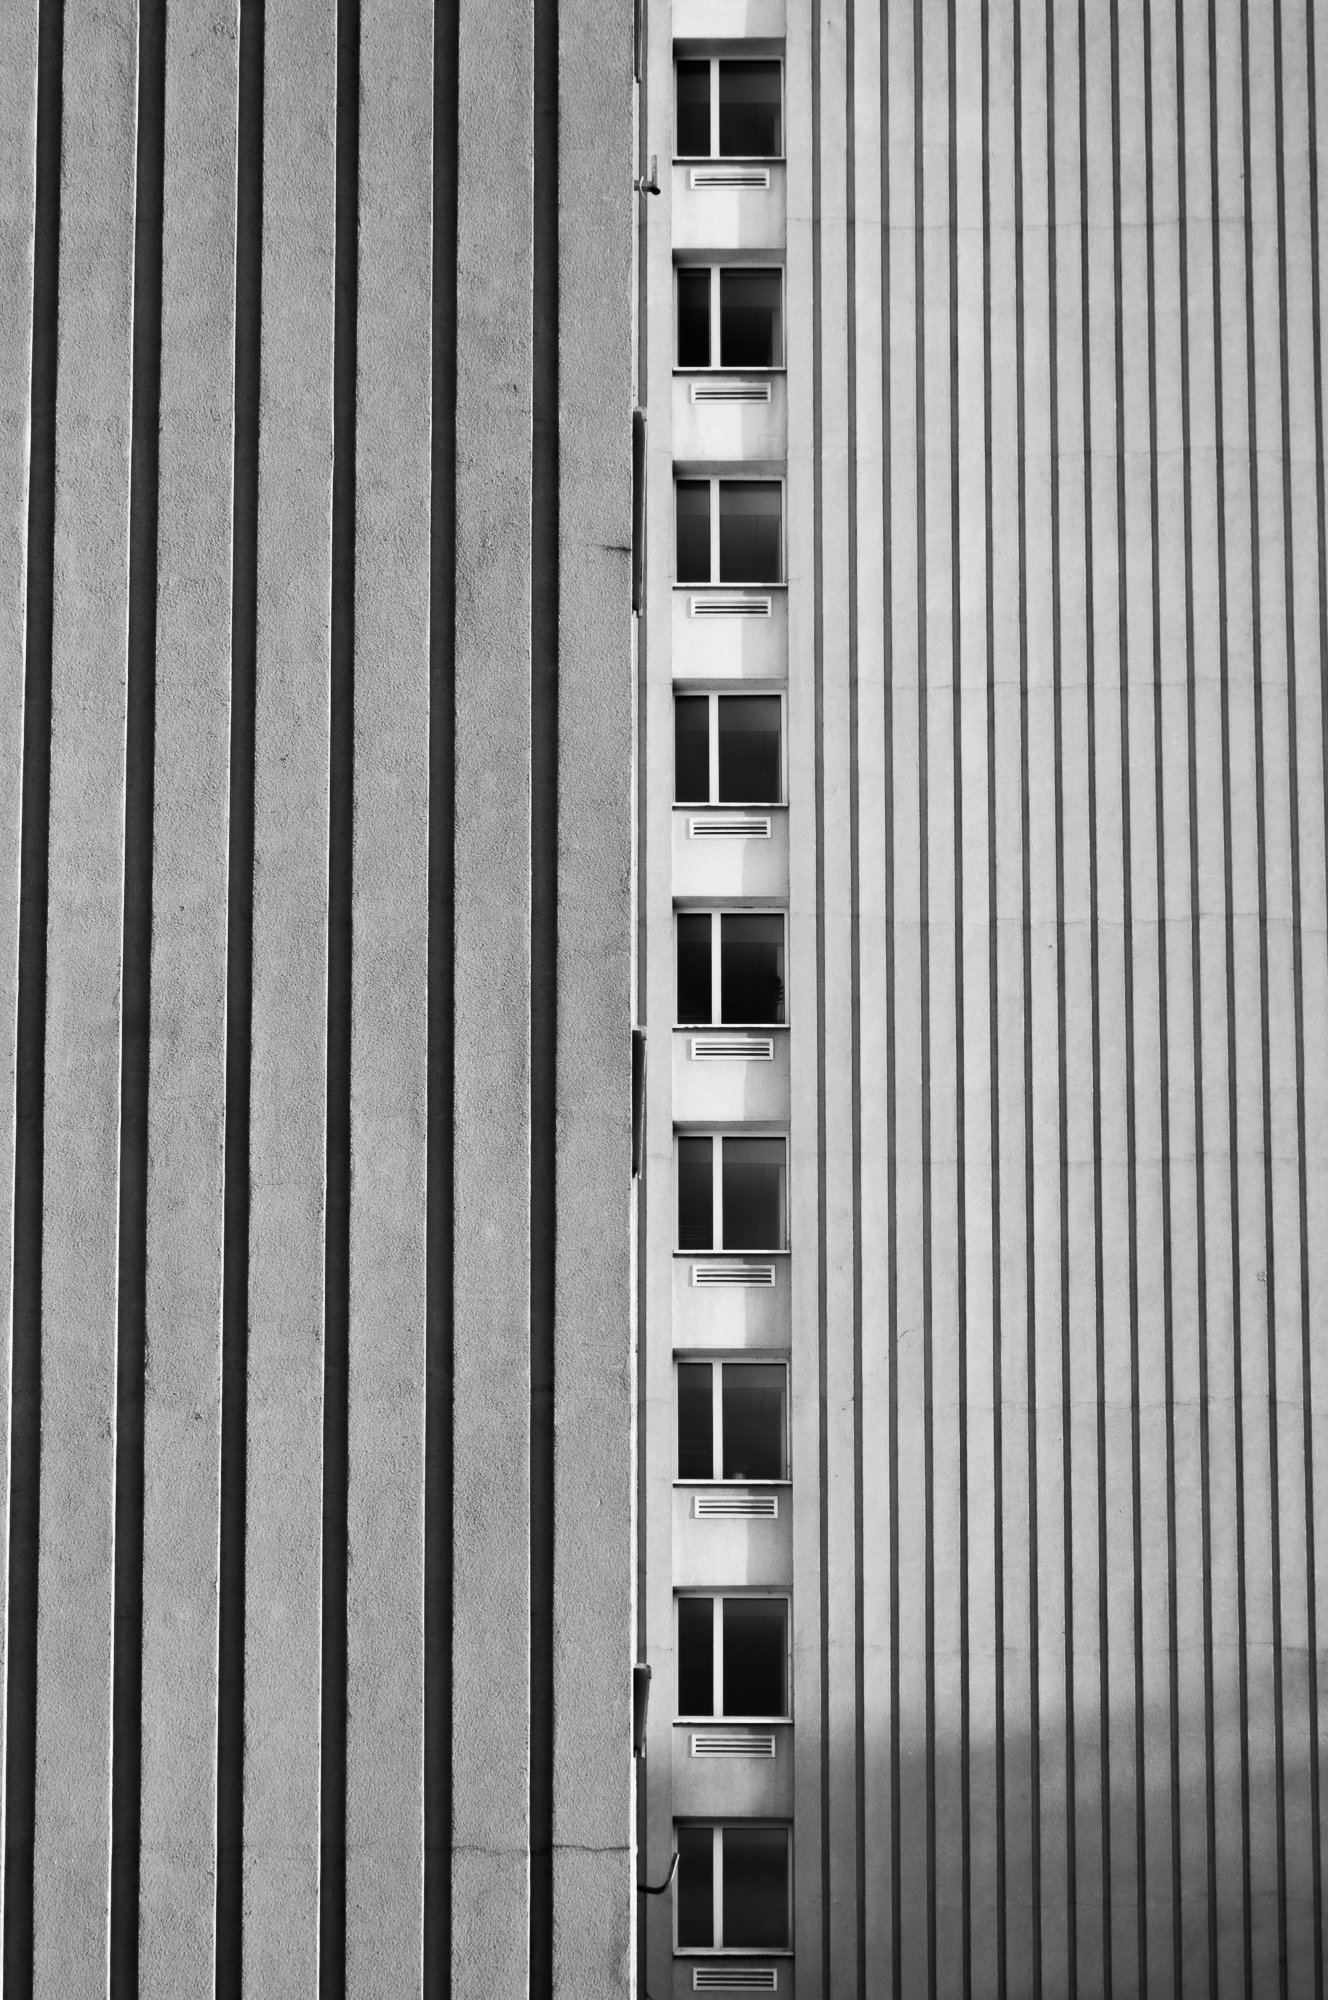 Adam Mazek Photography Warsaw 2018. Geometry. Blocks of flats. Perspective. Windows. Minimalism.